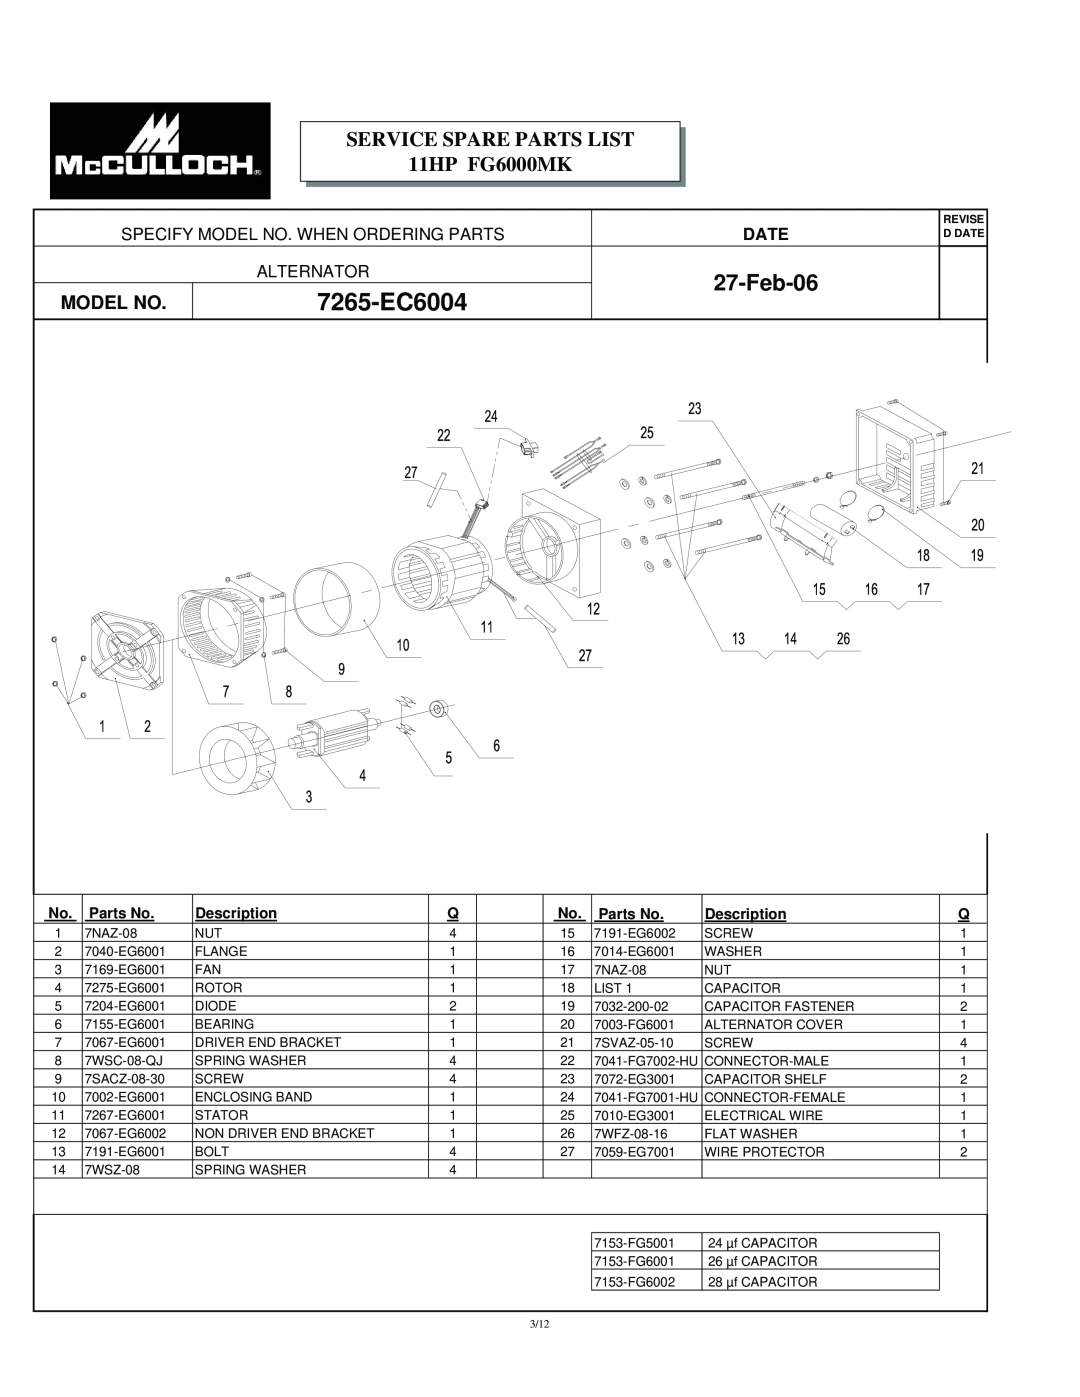 McCulloch FG6000MKUD-C 7265-EC6004, Feb-06, SERVICE SPARE PARTS LIST 11HP FG6000MK, Model No, Date, Alternator, Parts No 